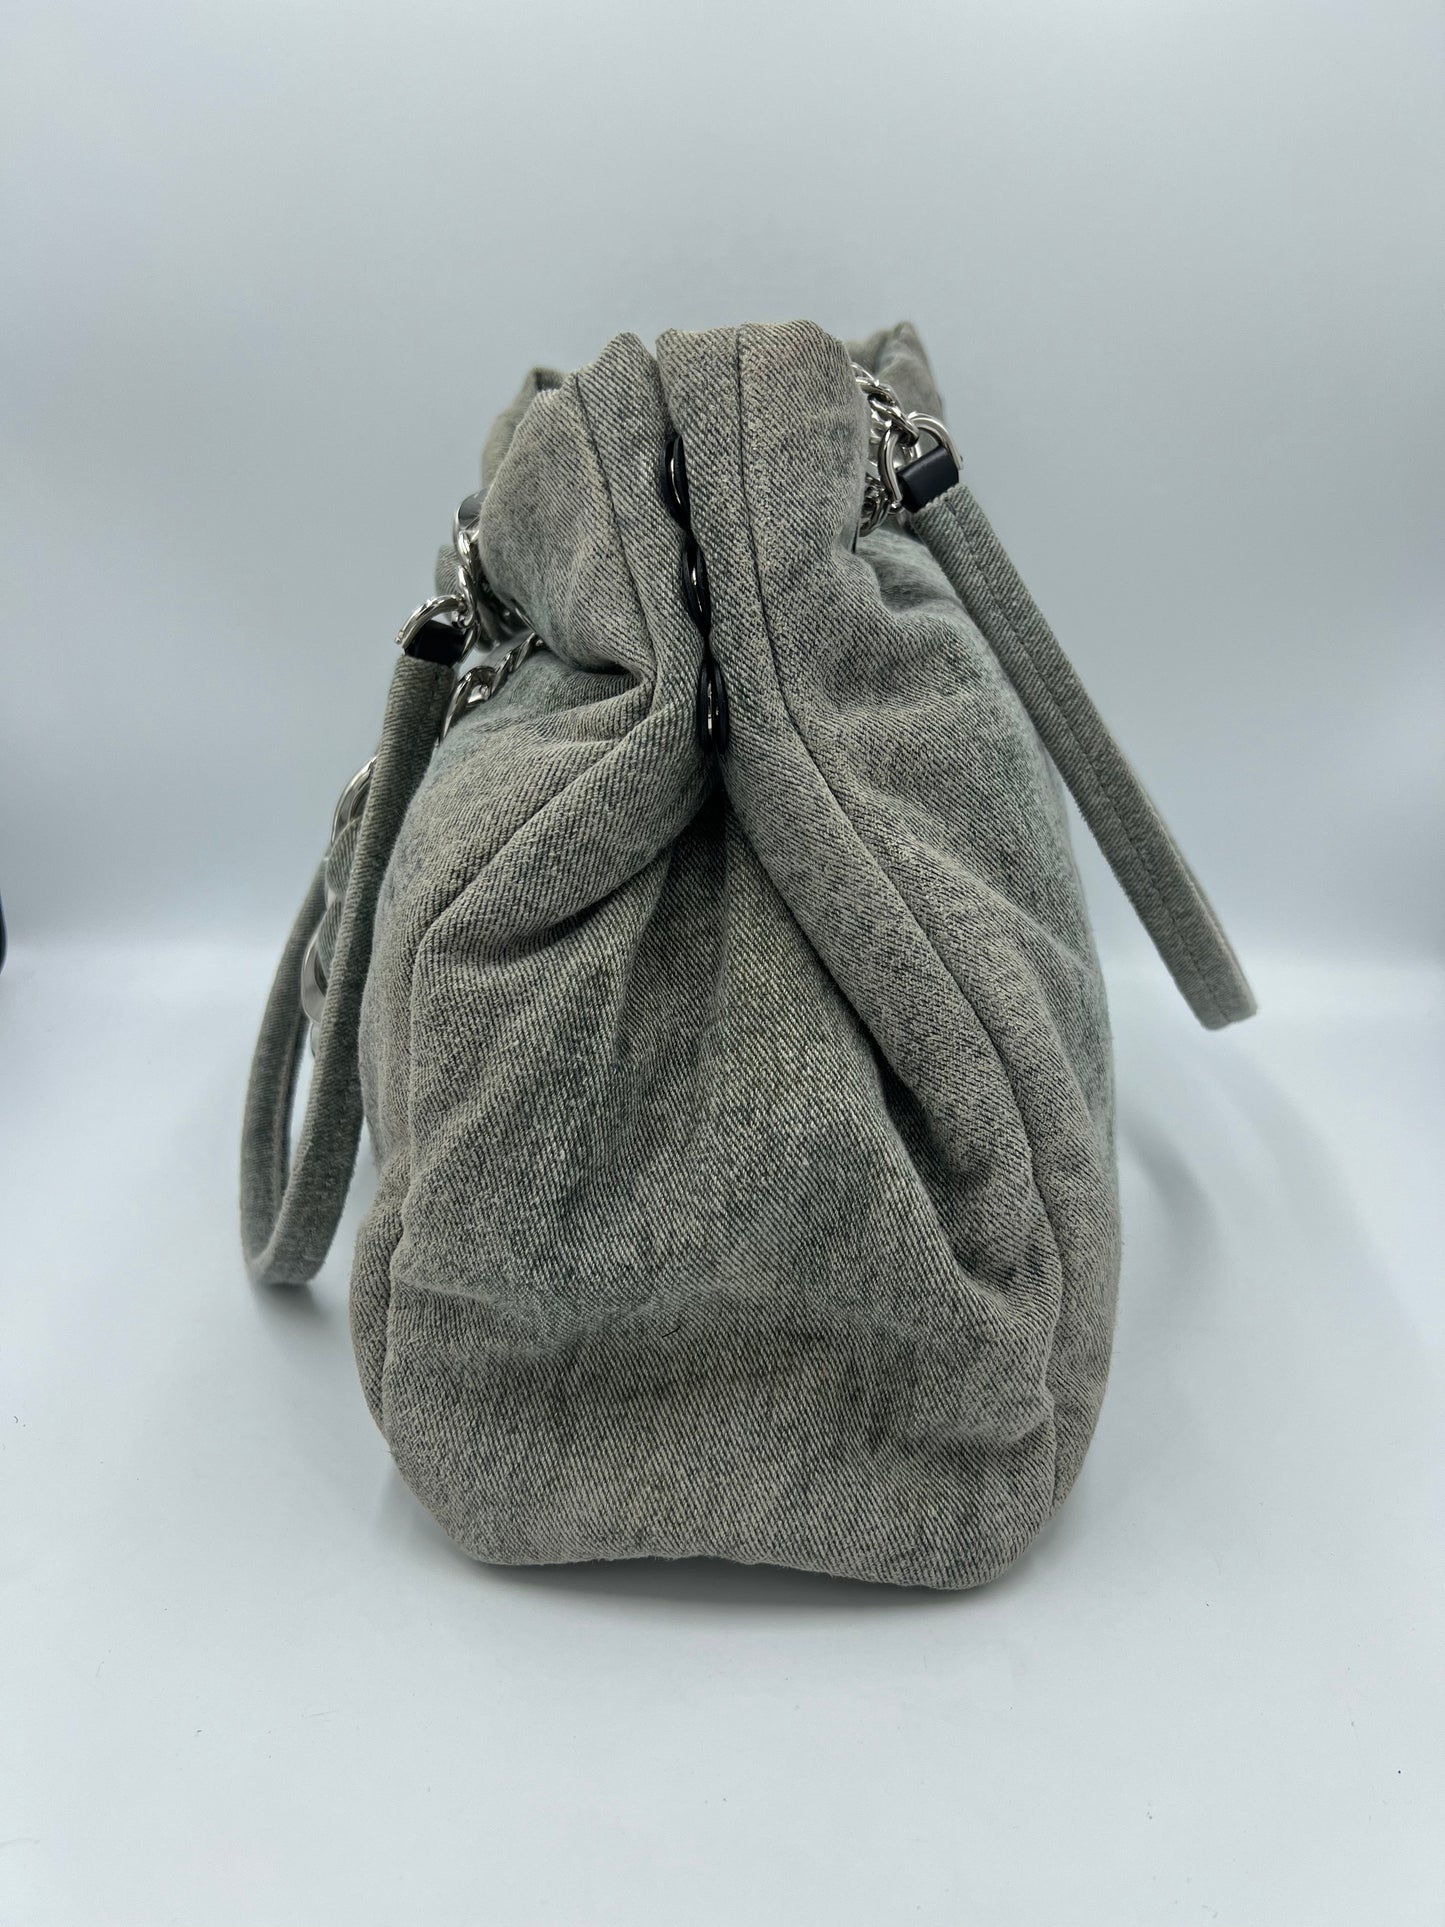 Balmain 1945 Soft Cabas Tote Bag